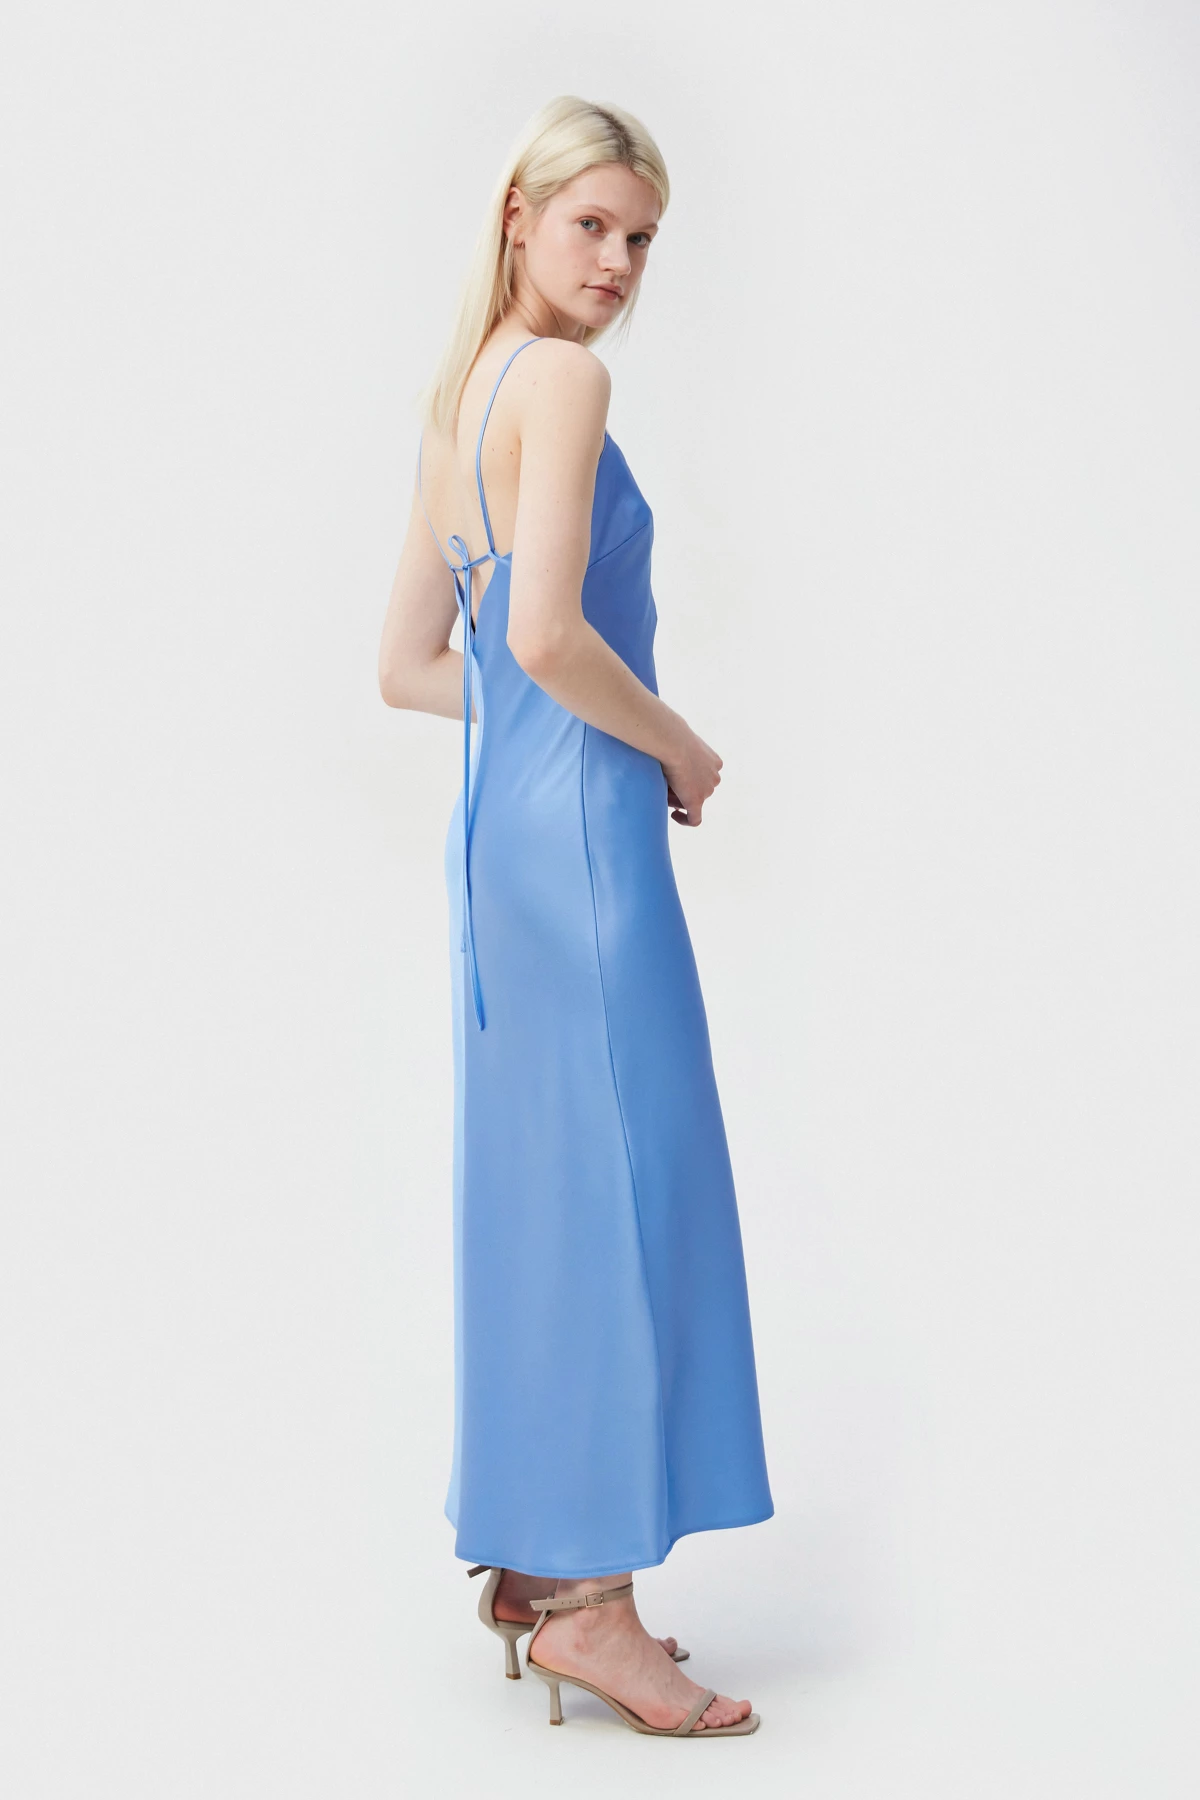 Blue satin open-back dress, photo 1